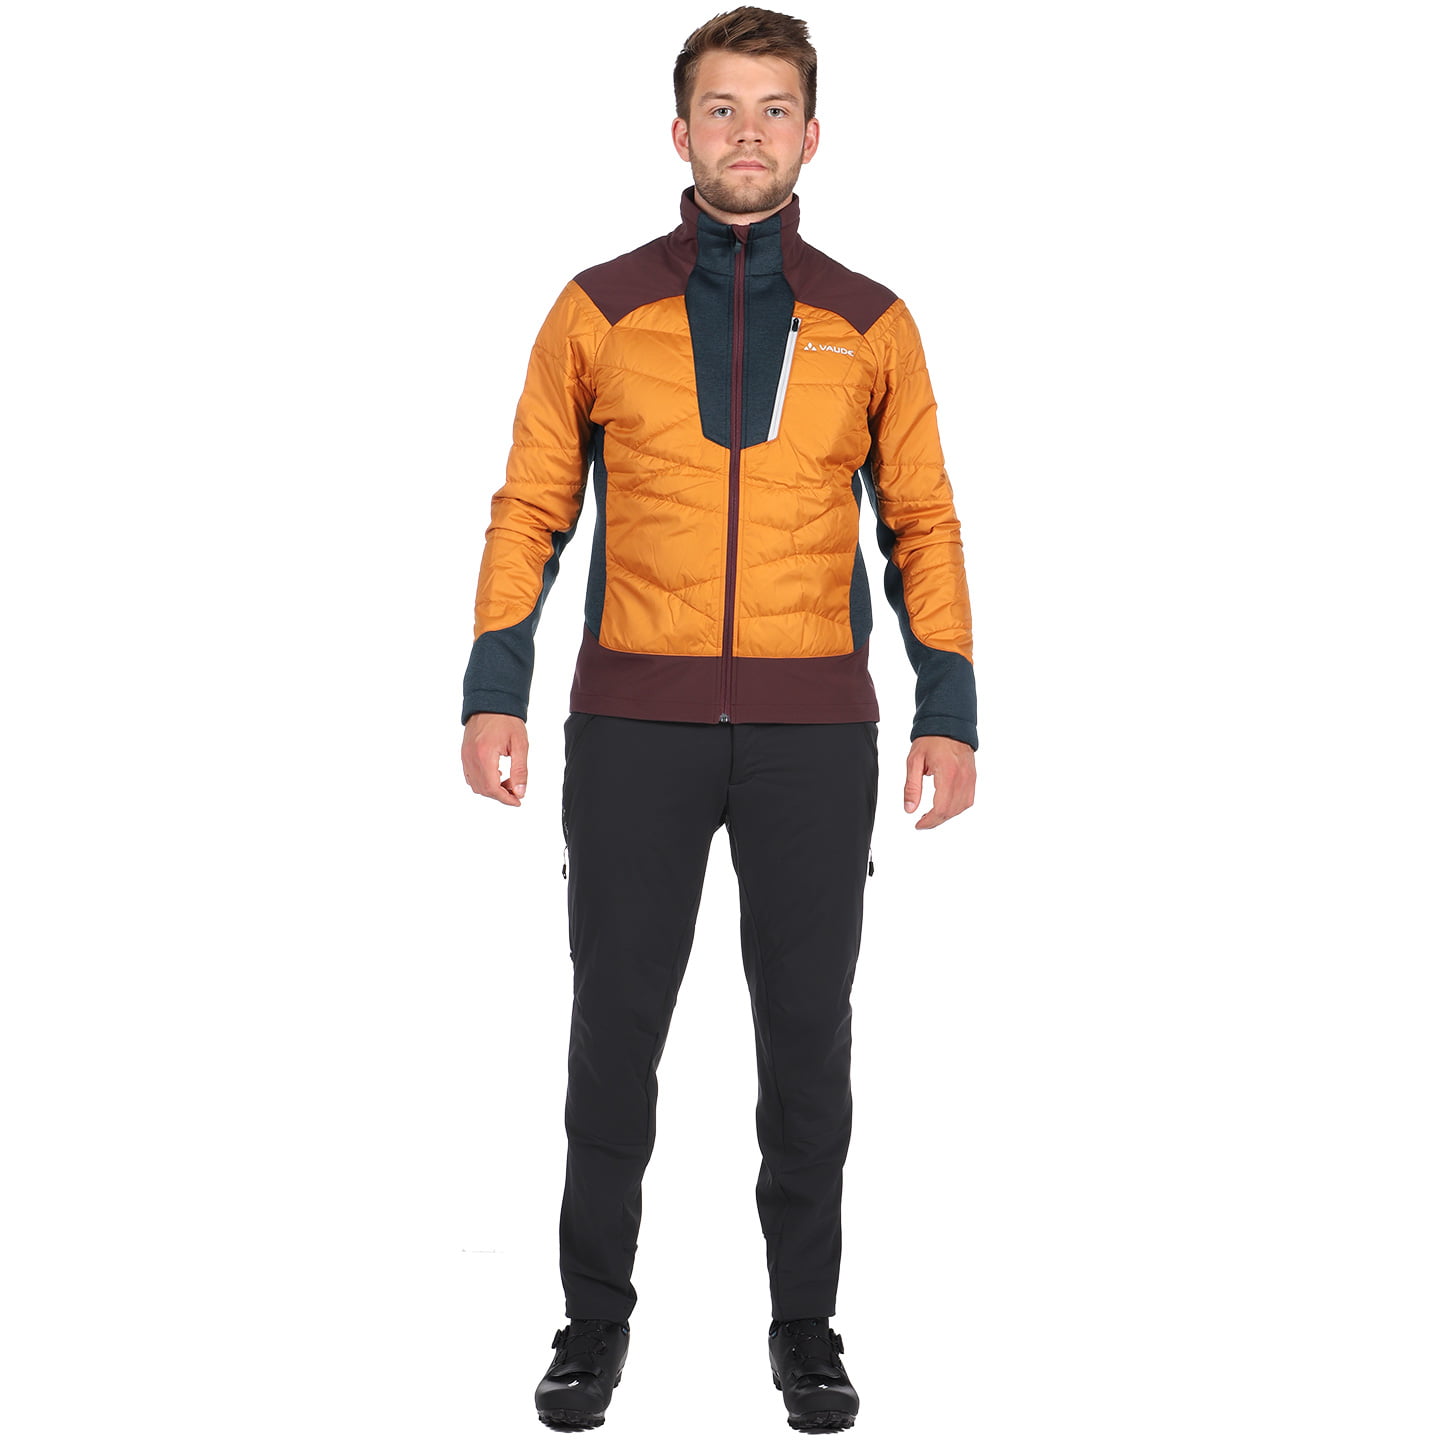 VAUDE Minaki III Set (winter jacket + cycling tights) Set (2 pieces), for men